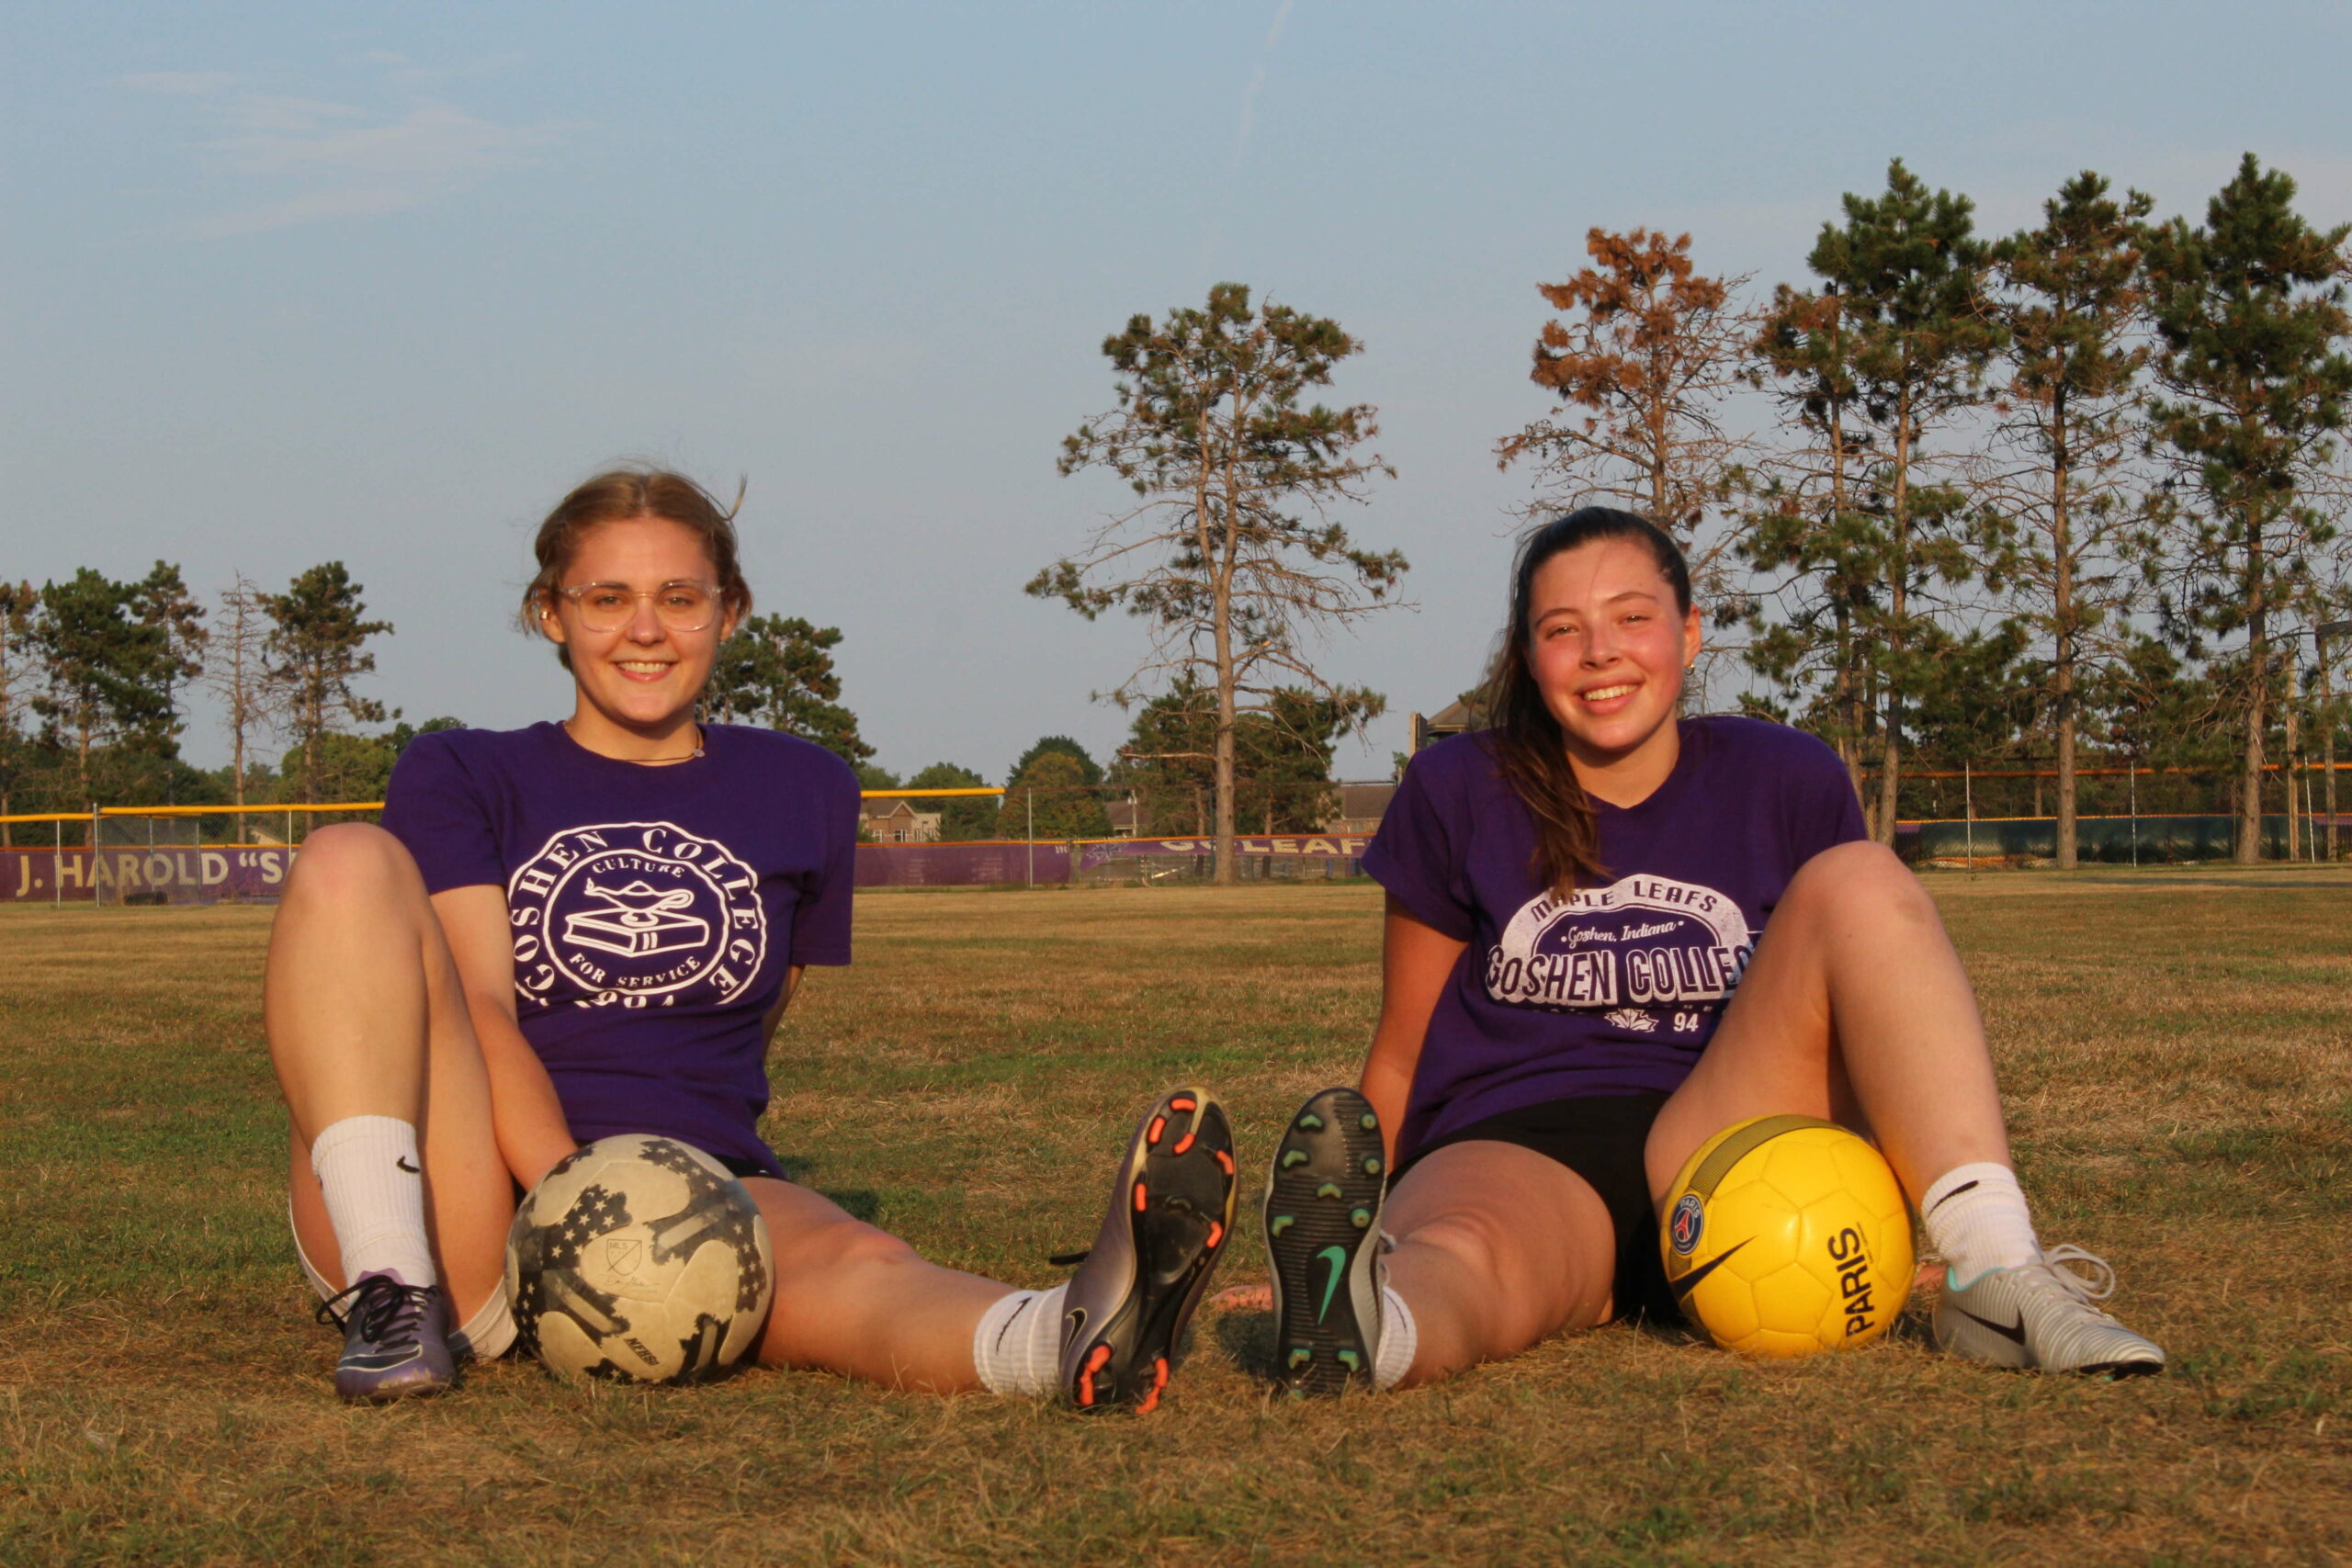 Savannah and Olivia pose with soccer balls